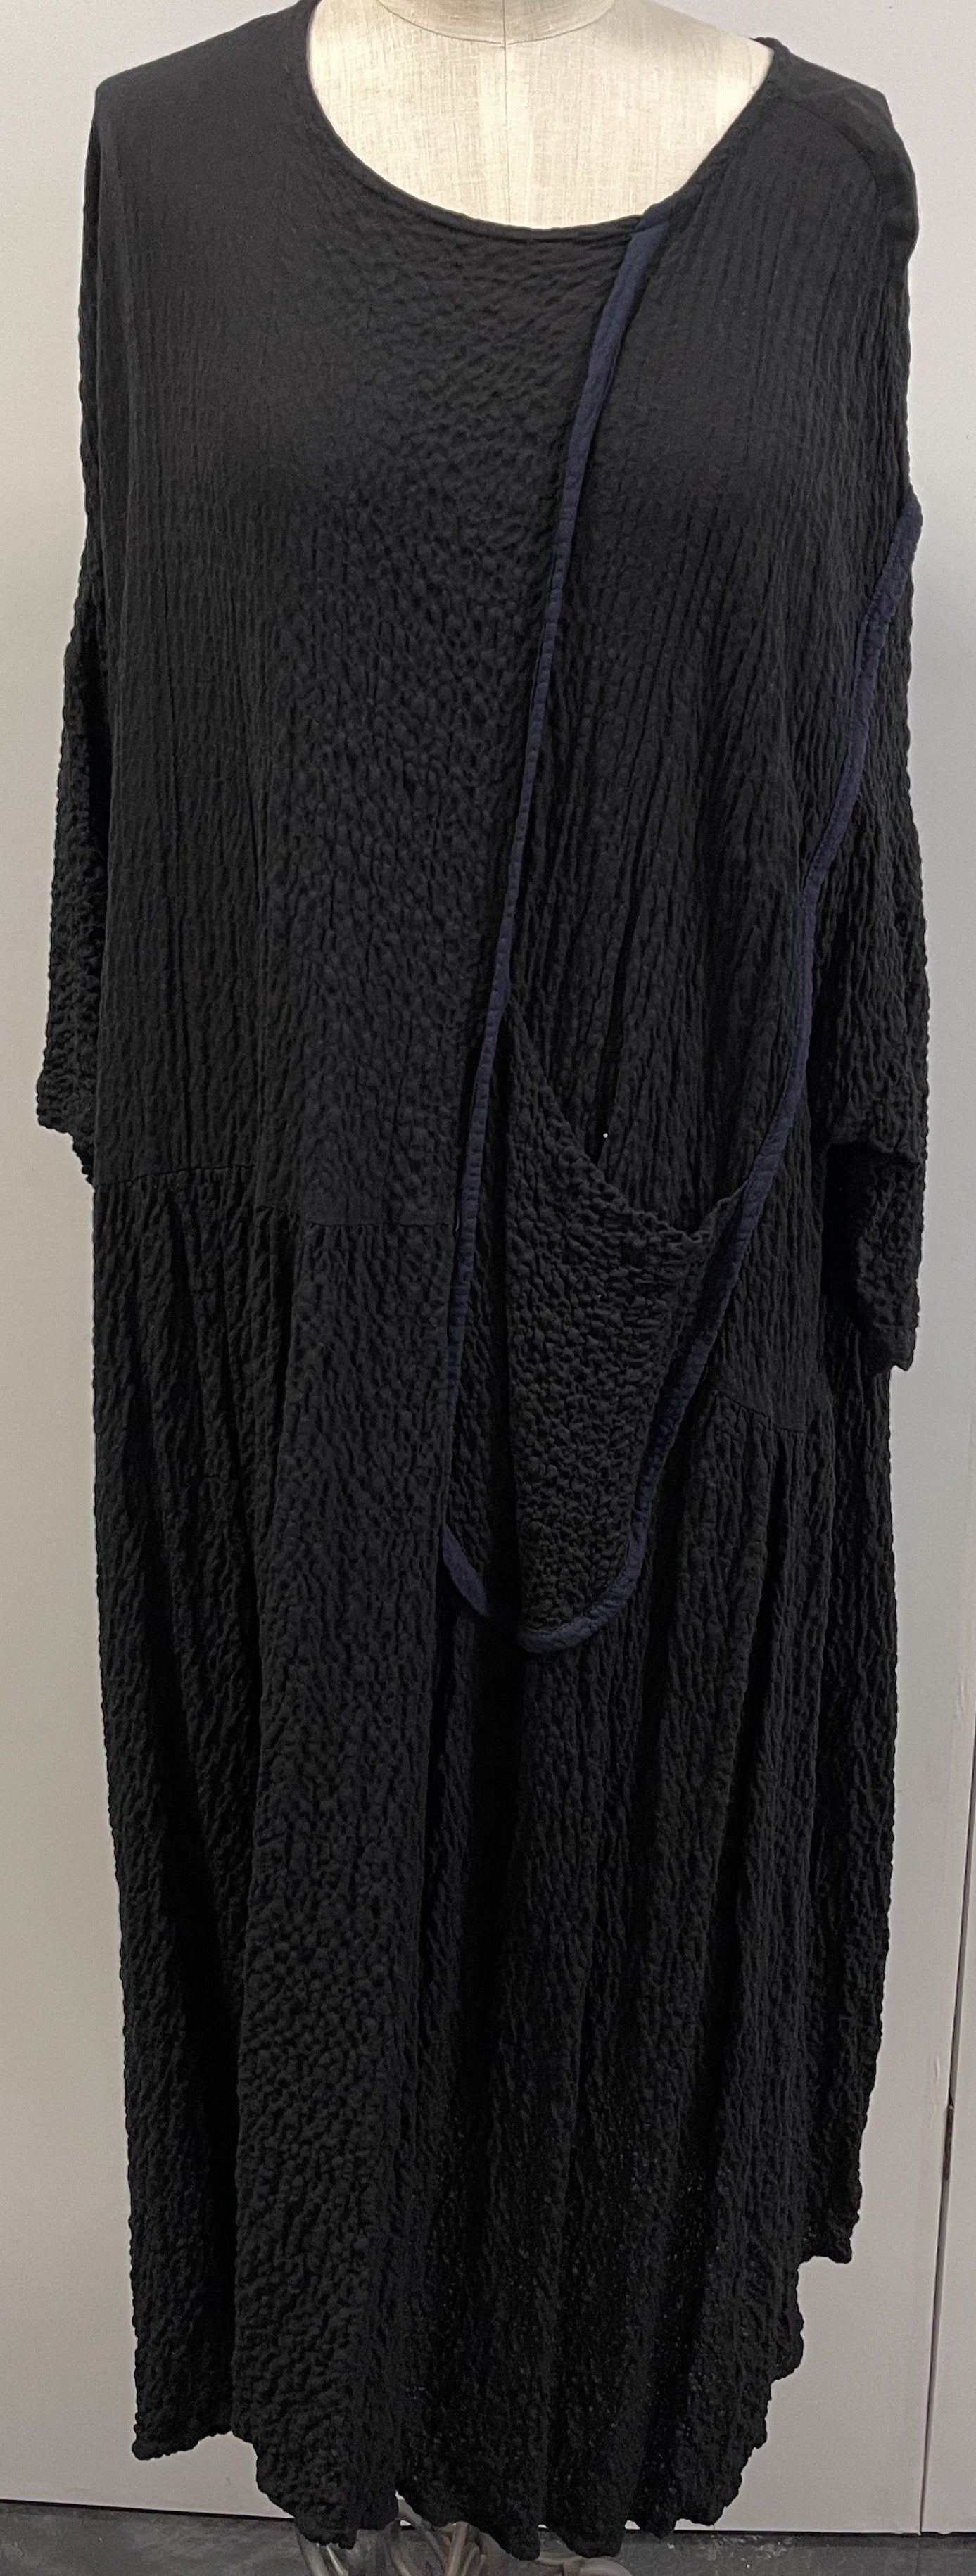 KEDEM BLACK DRESS WITH NAVY TRIM